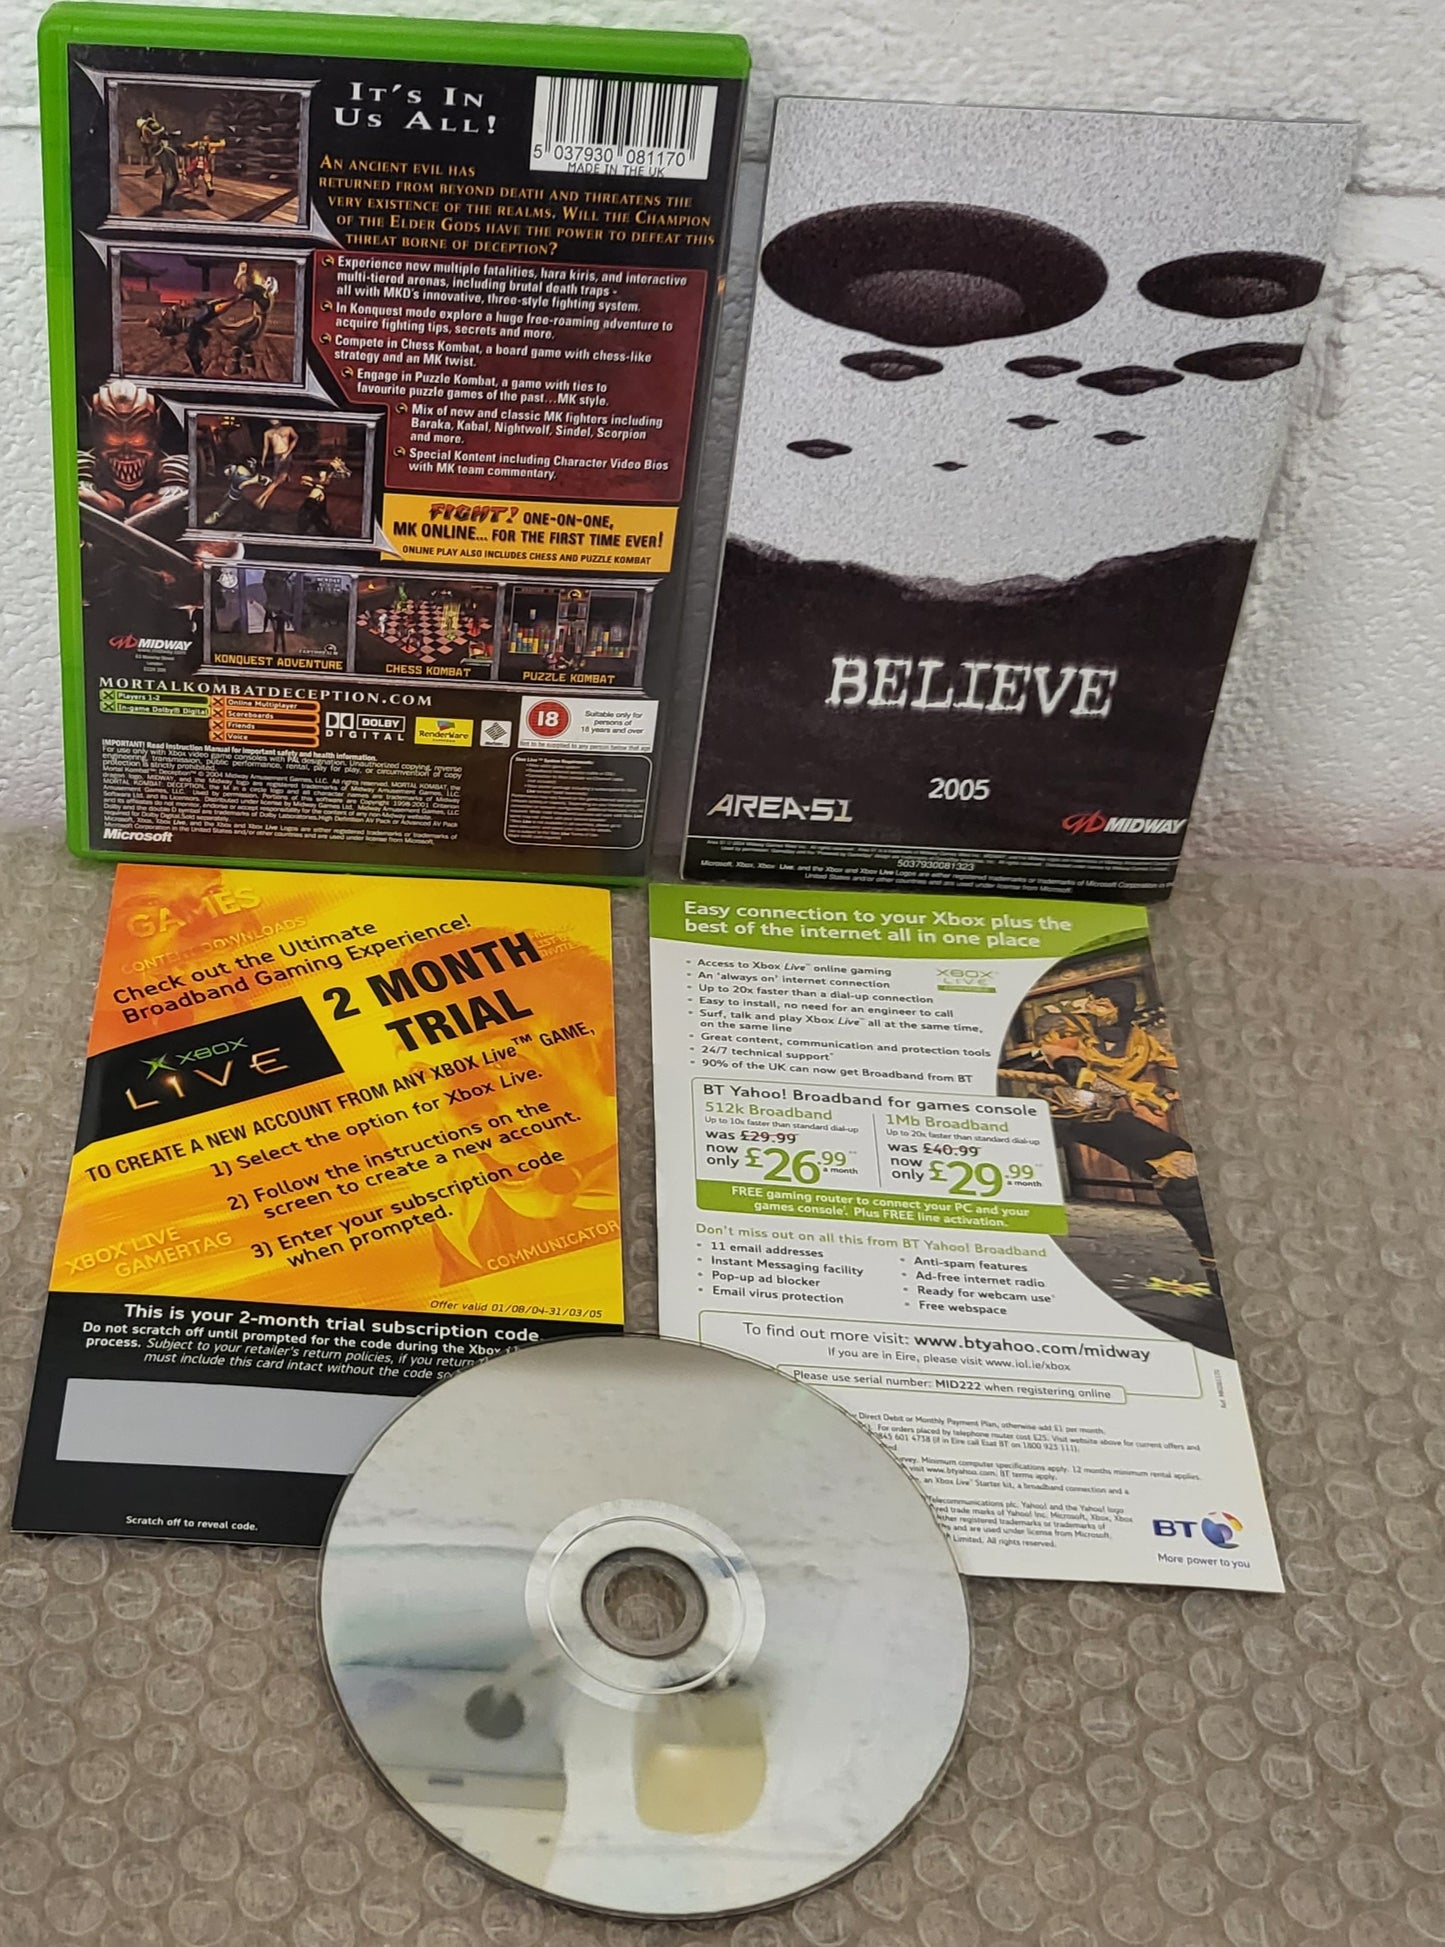 Mortal Kombat Deception Microsoft Xbox Game